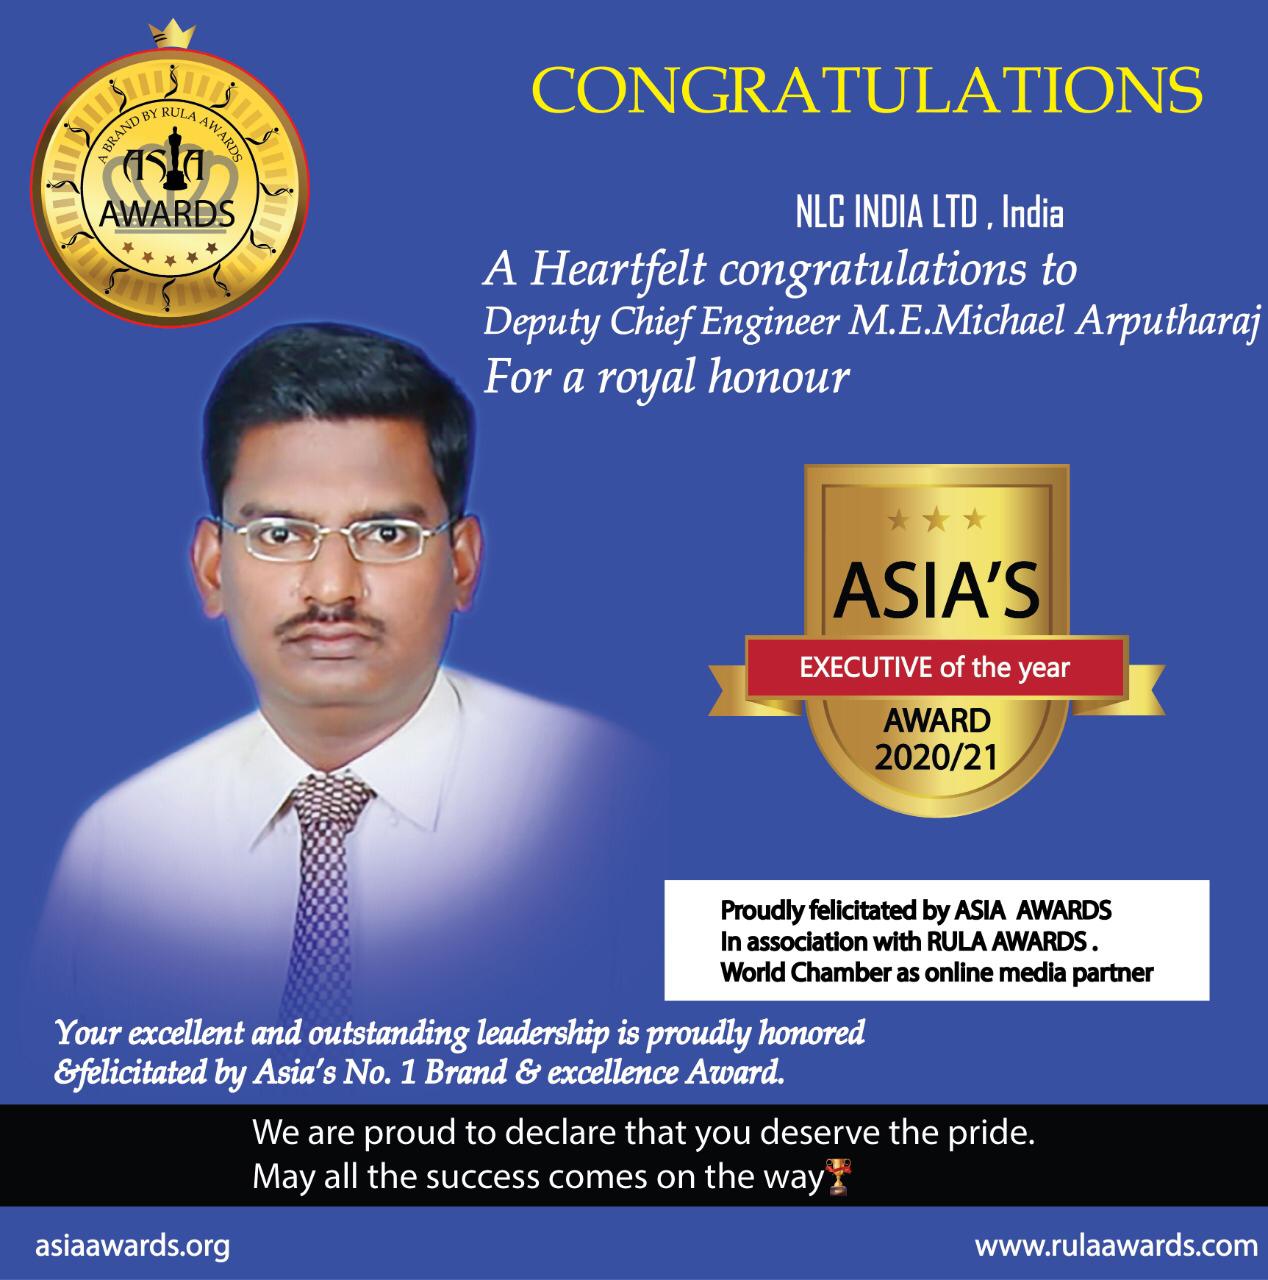 M.E.Michael Arputharaj has bagged Asia's Executive of the Year